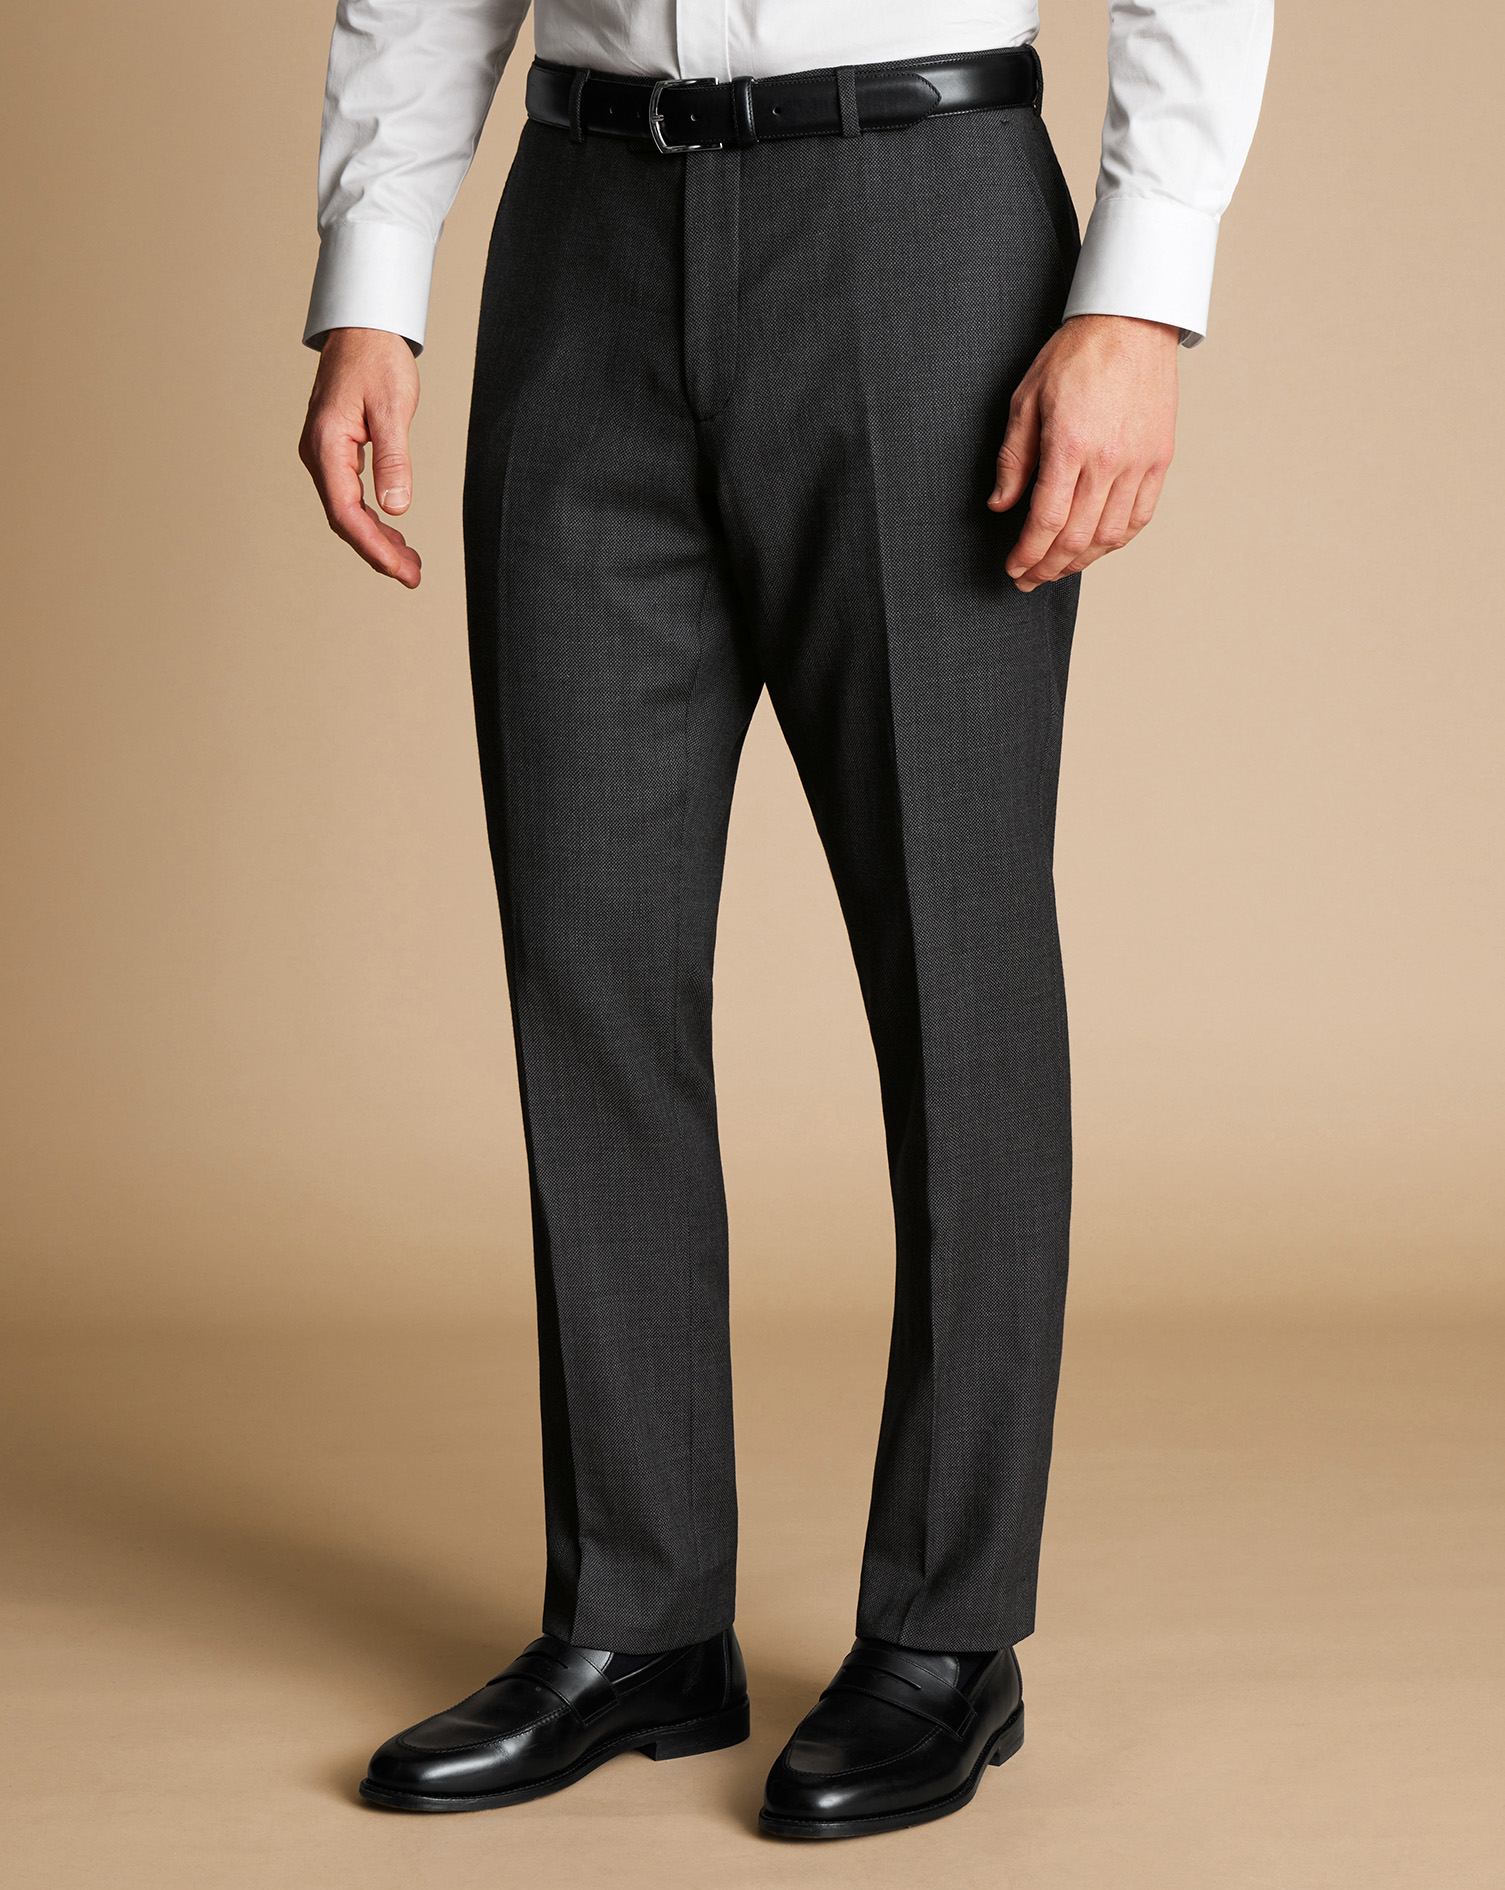 Men's Charles Tyrwhitt Ultimate Performance Birdseye Suit Trousers - Grey Size 34/32 Wool
